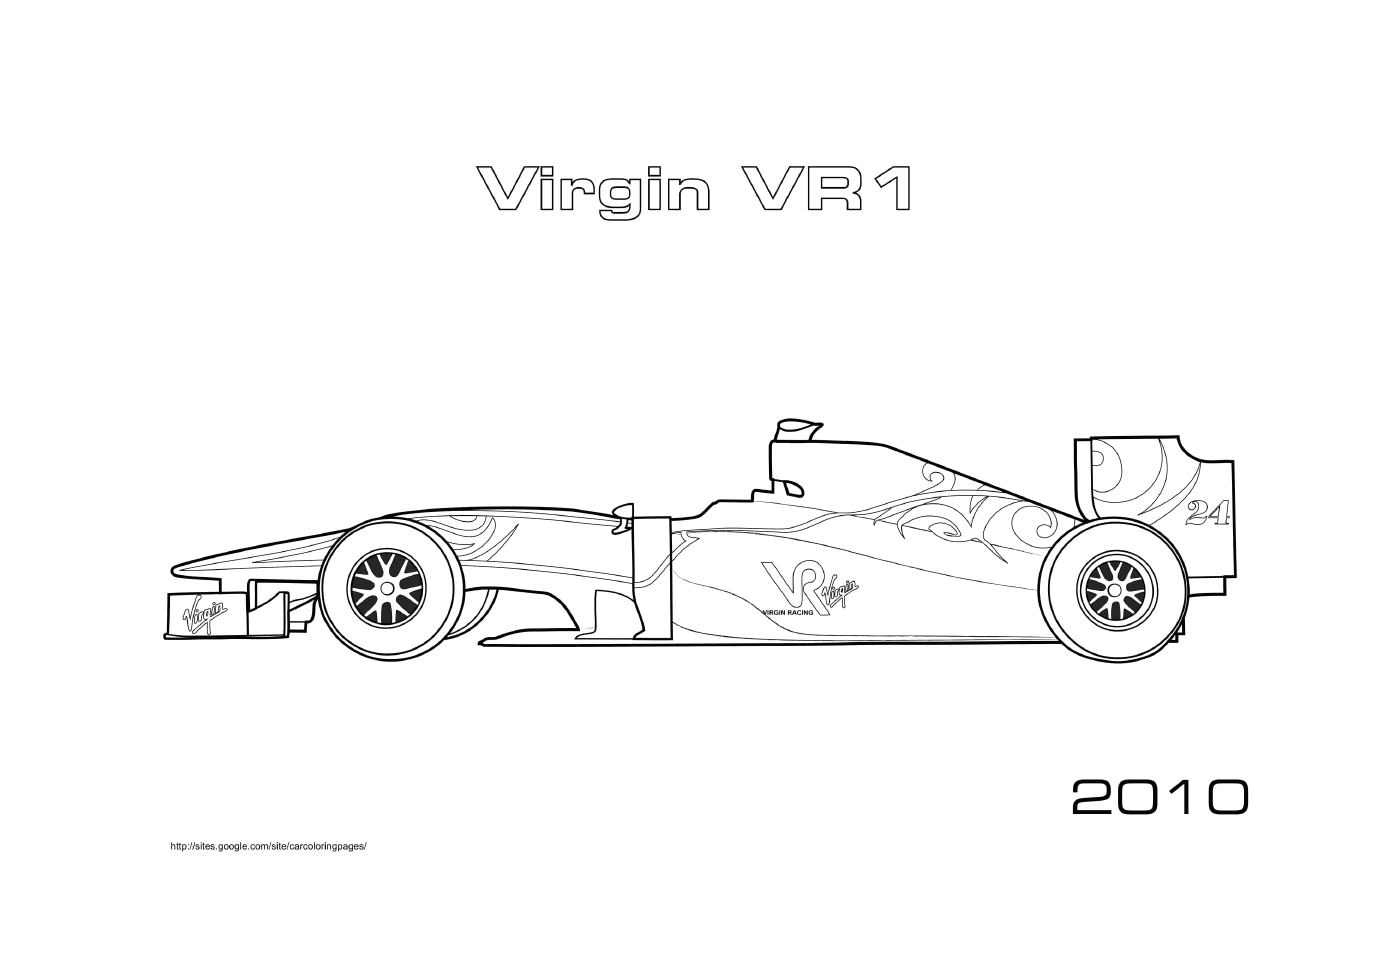  F1 Virgen Vr1 2010 